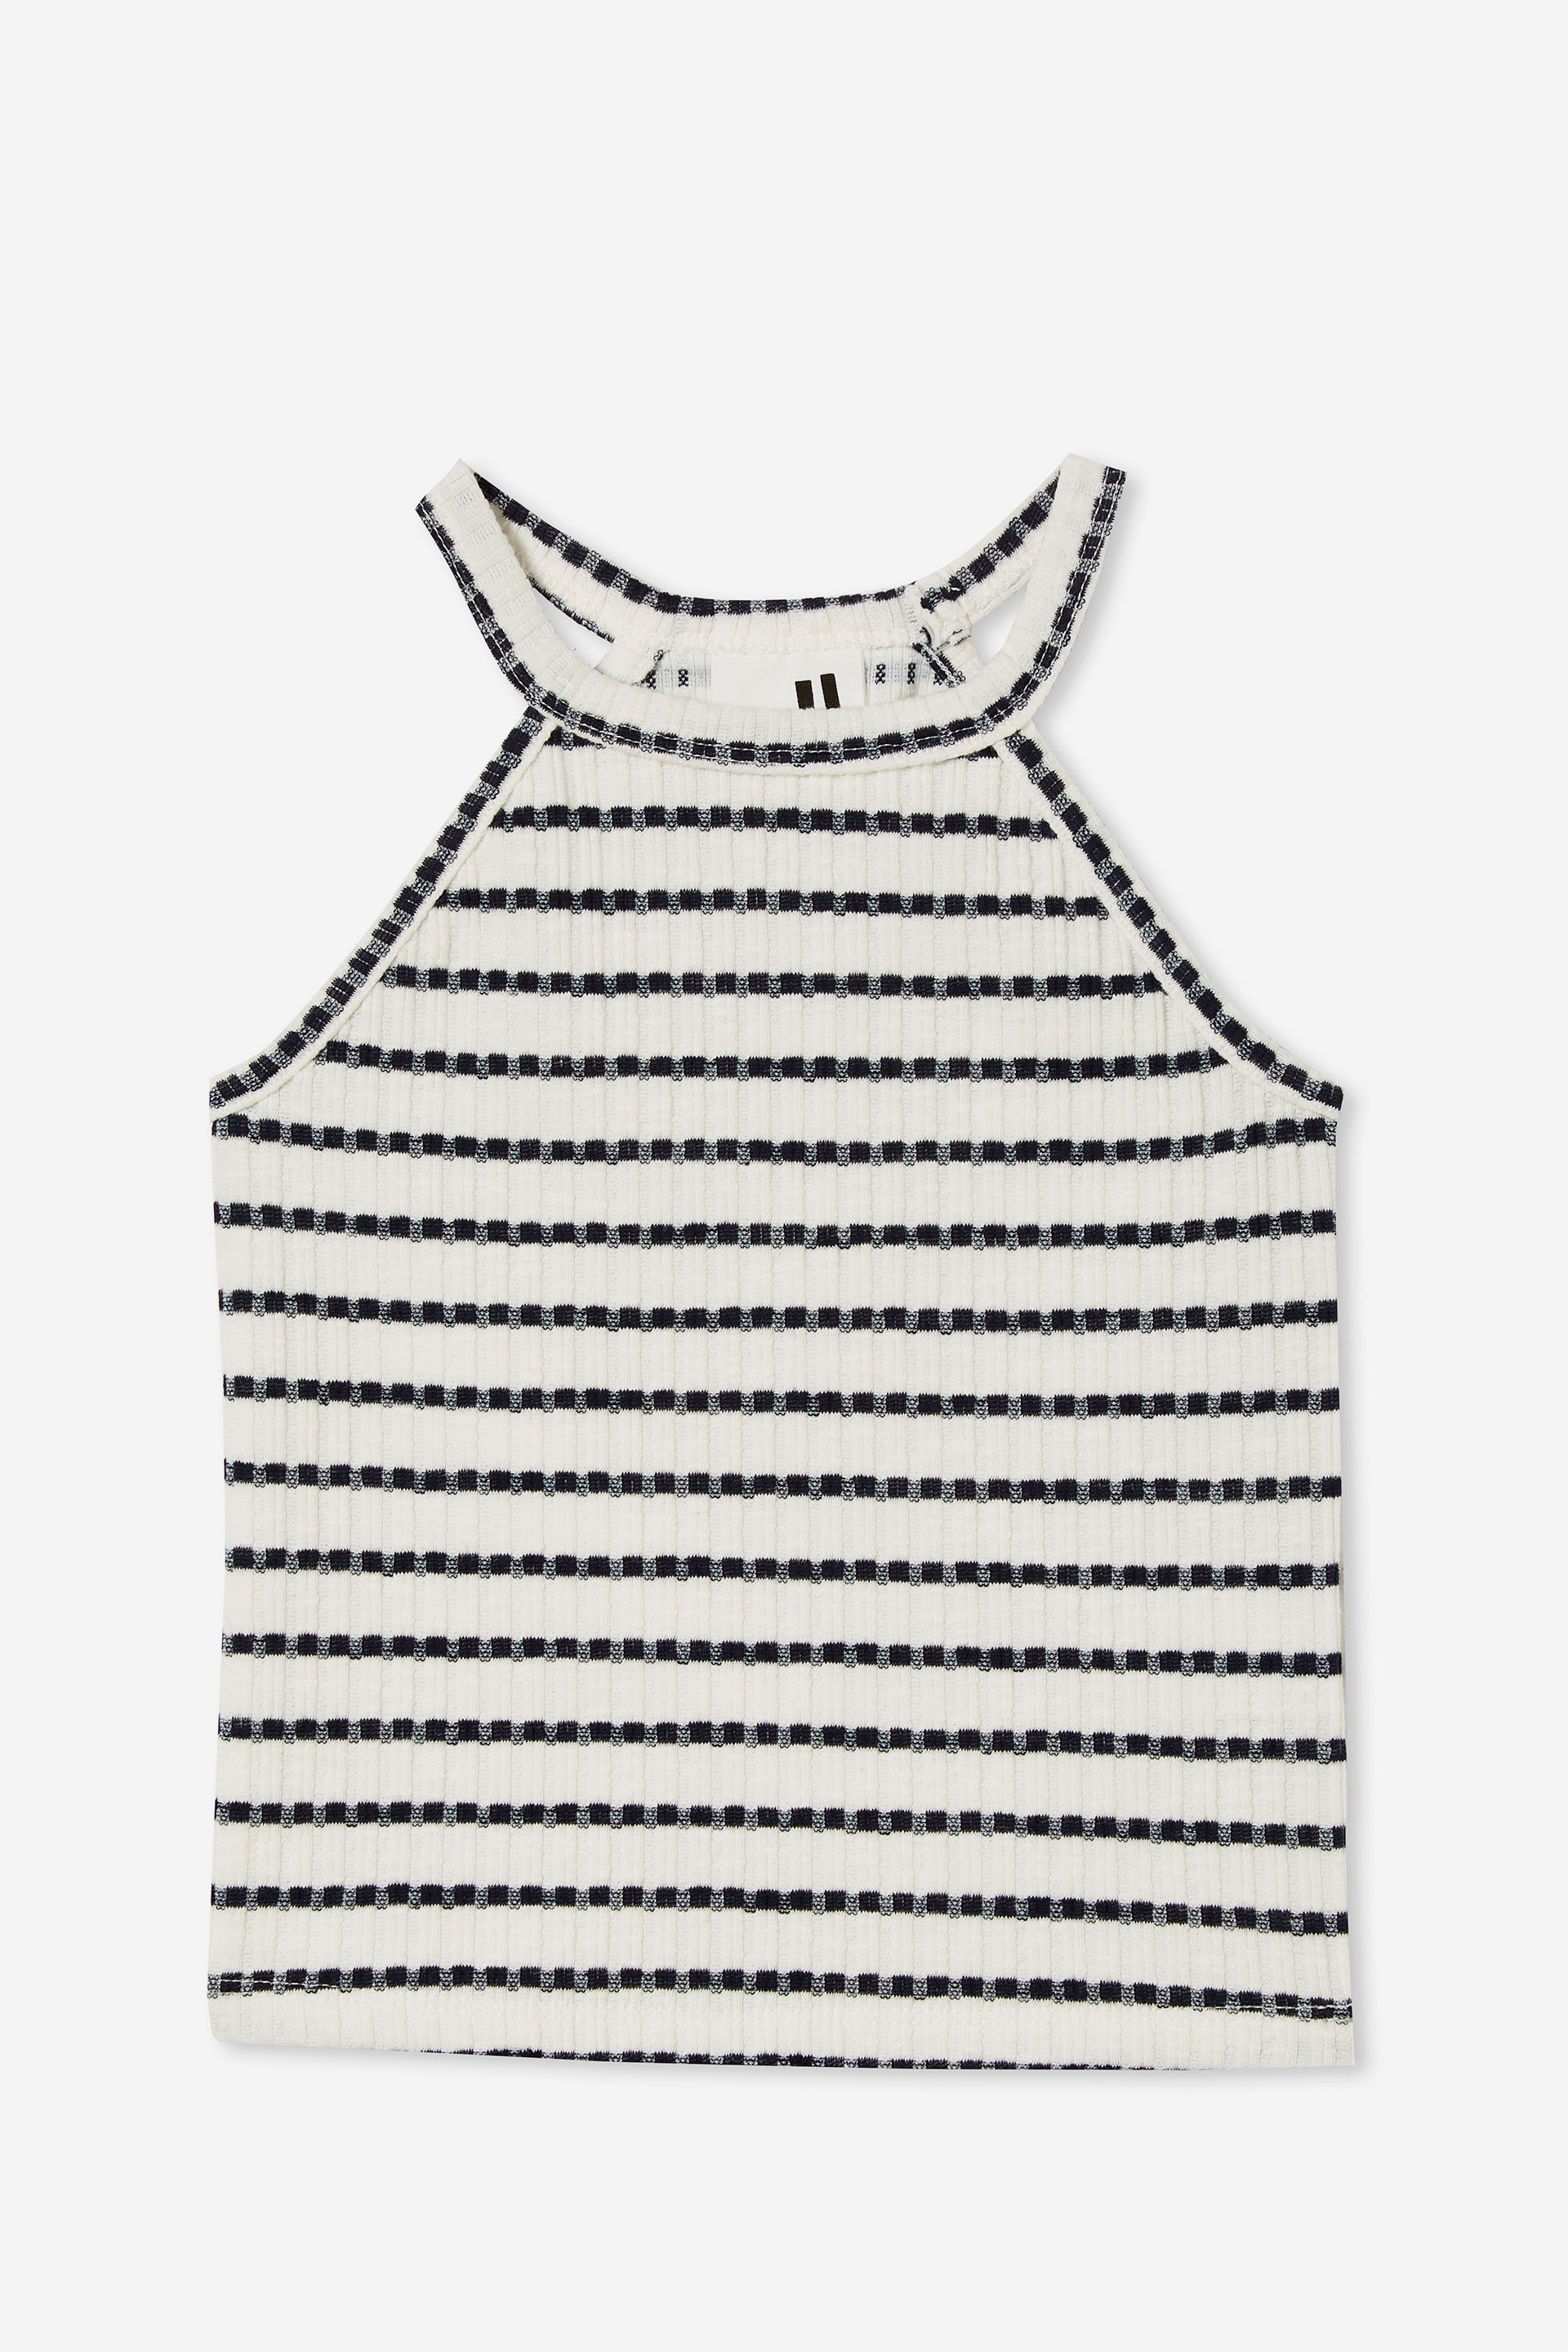 Cotton On Kids - Leah Rib Tank - Vanilla/navy blazer stripe